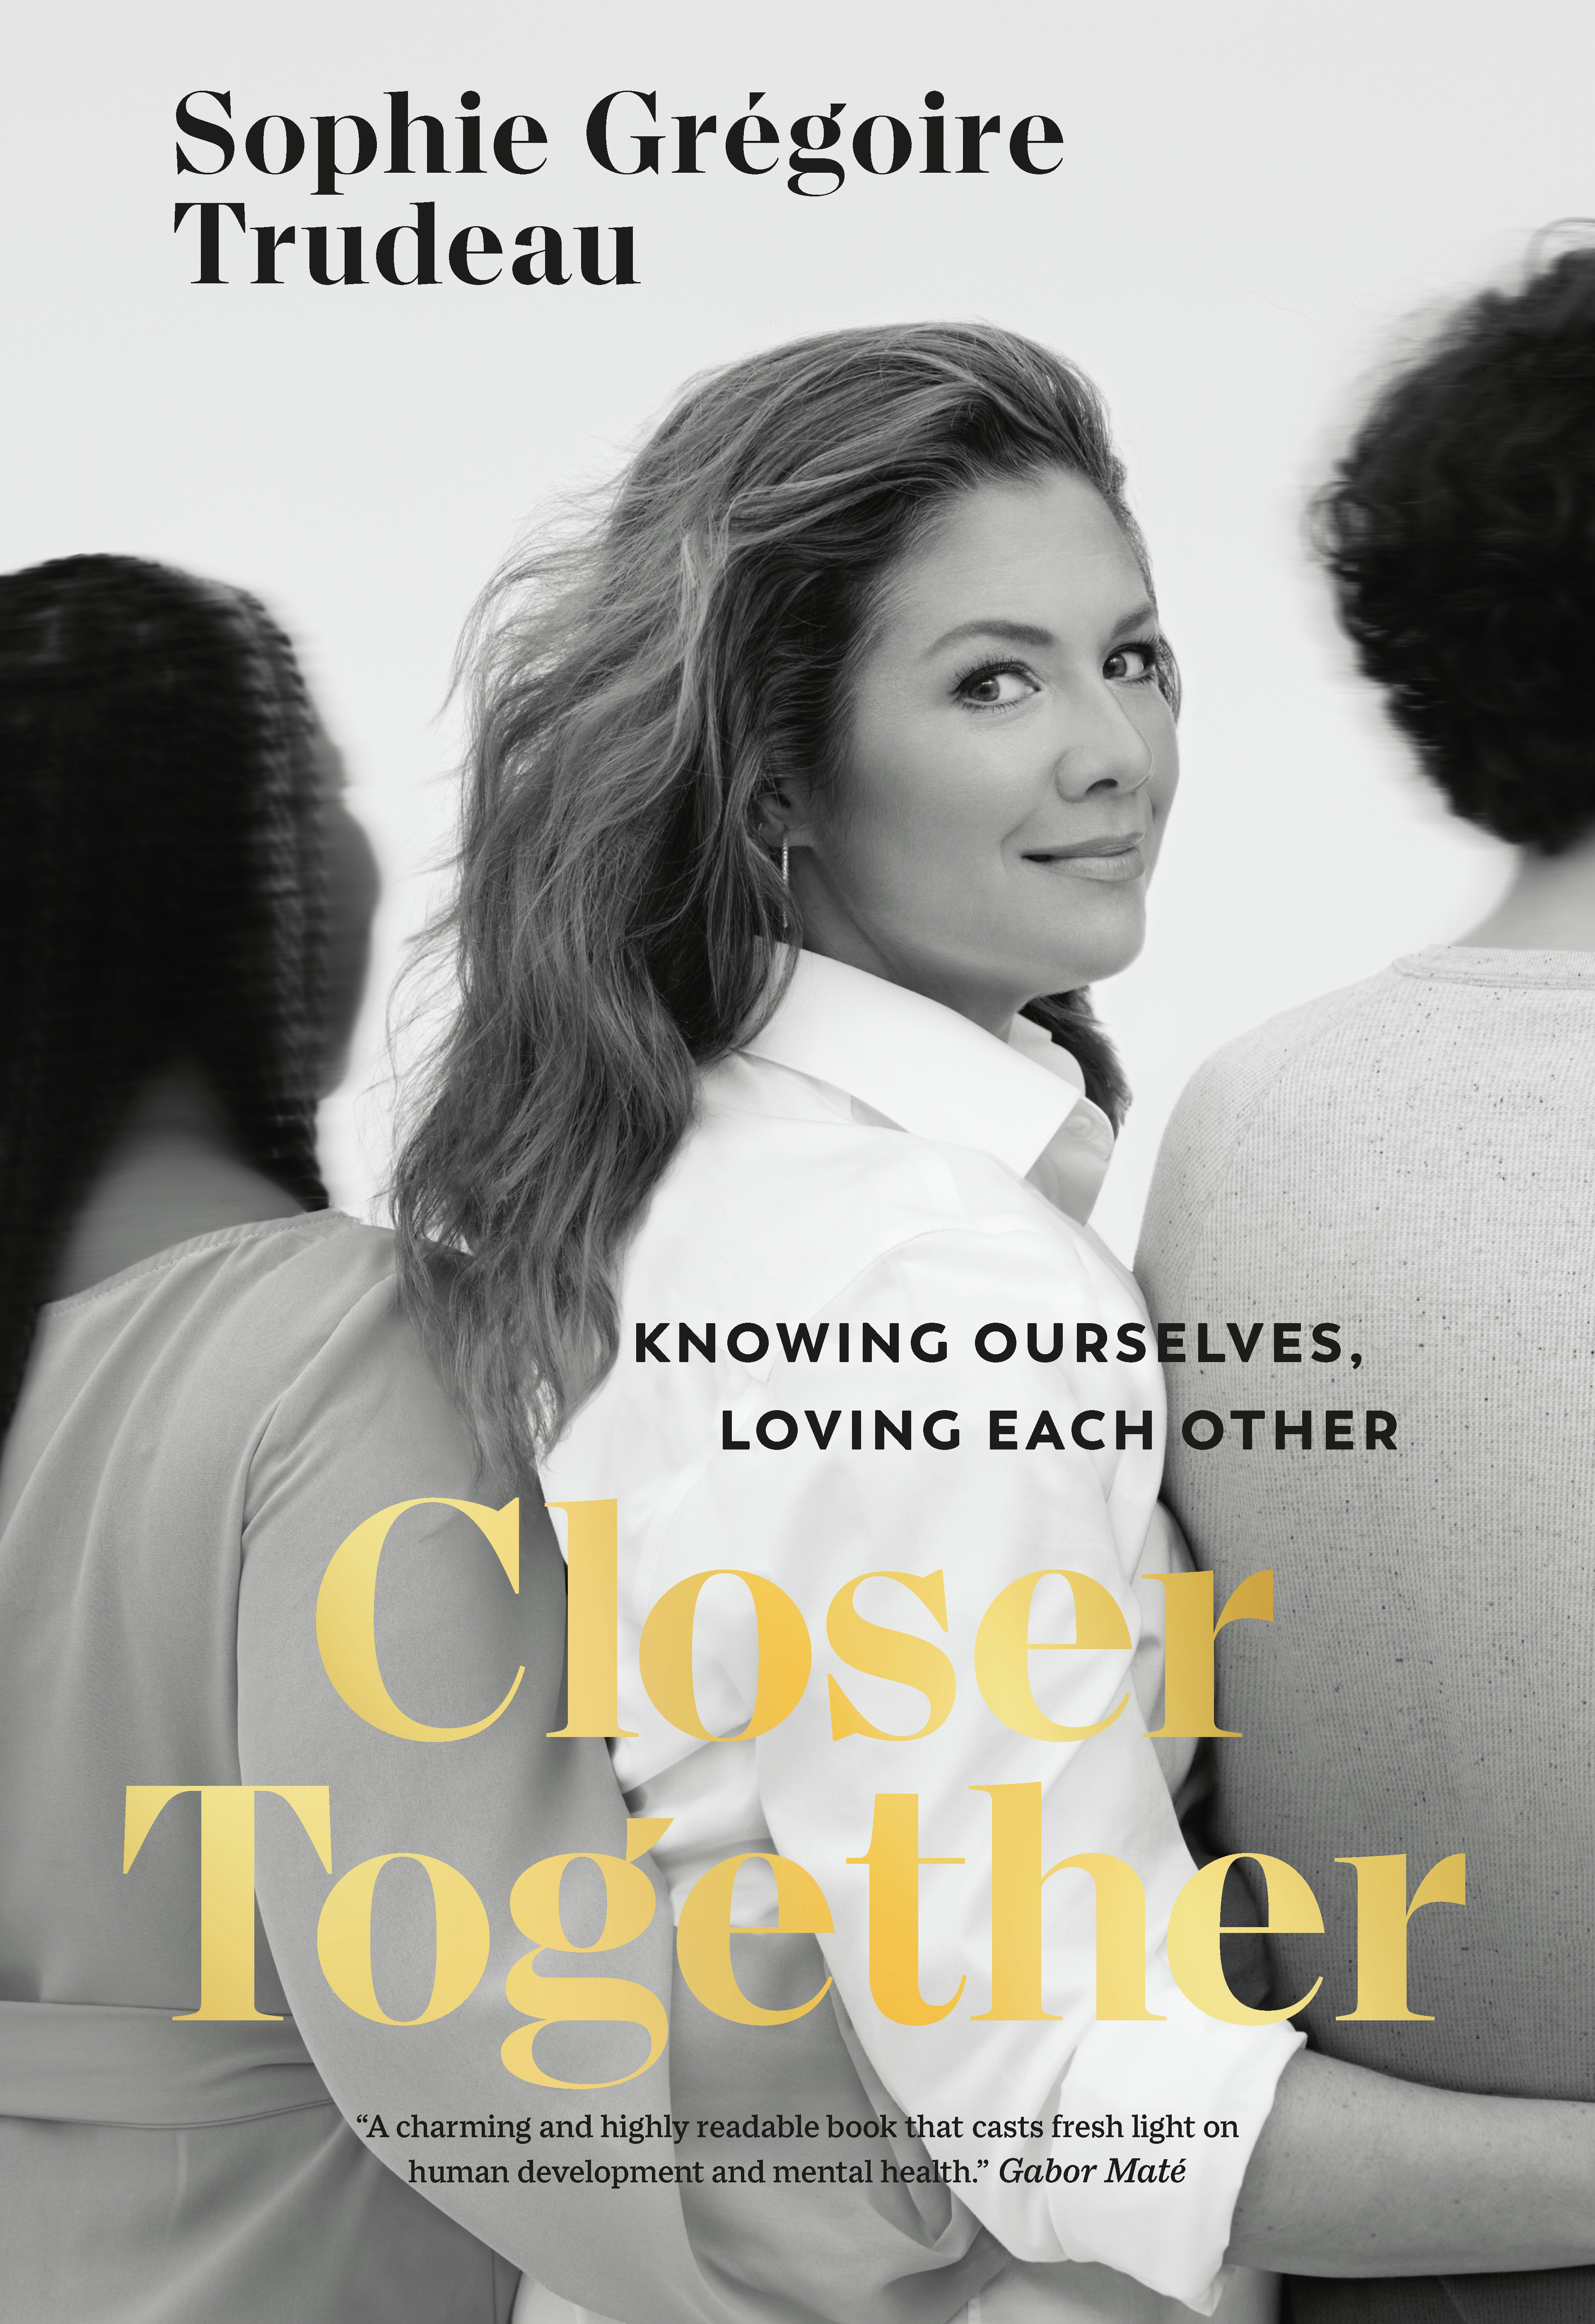 Closer Together : Knowing Ourselves, Loving Each Other | Grégoire Trudeau, Sophie (Auteur)